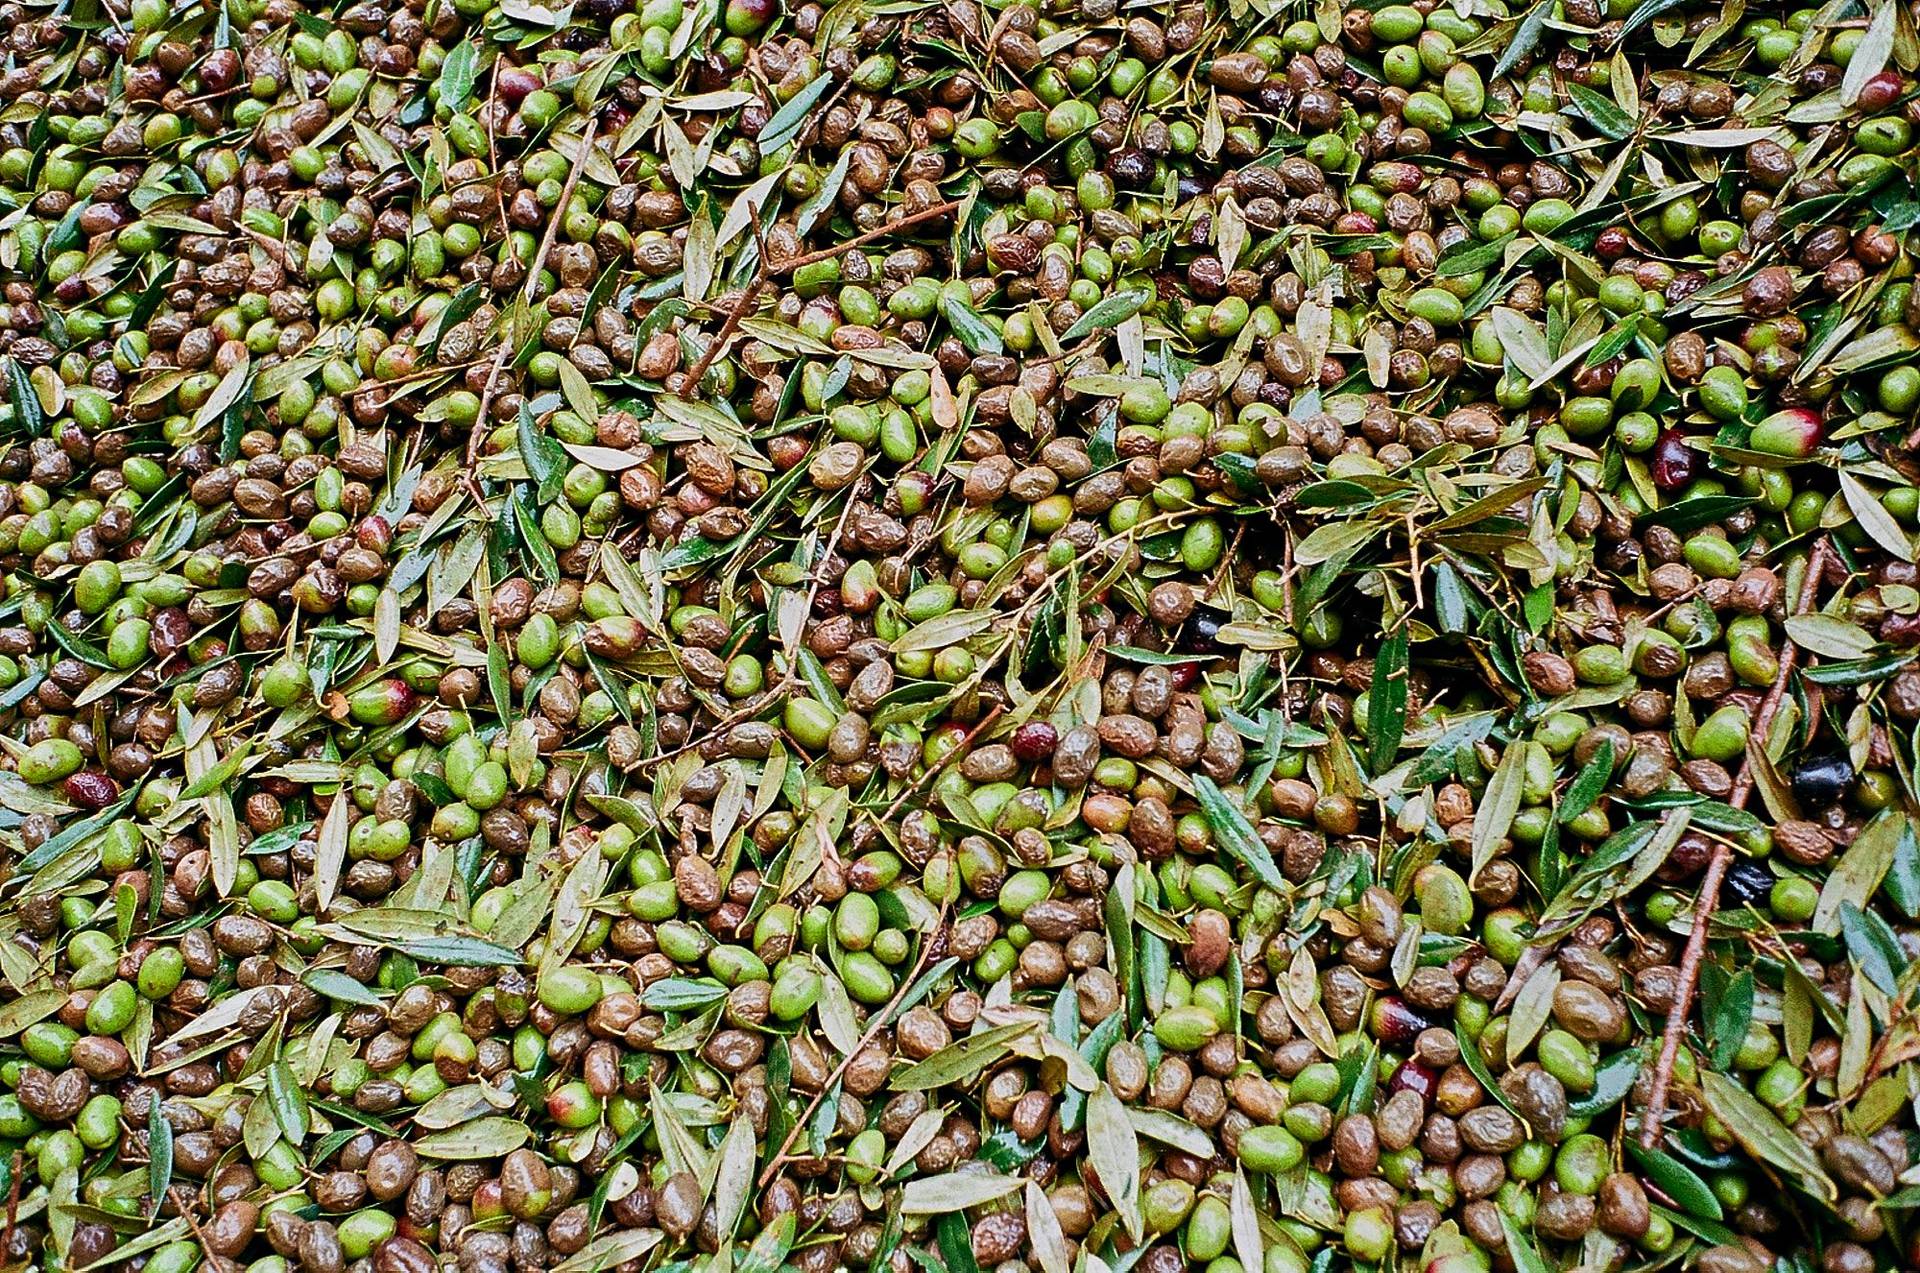 olive oil production in alentejo